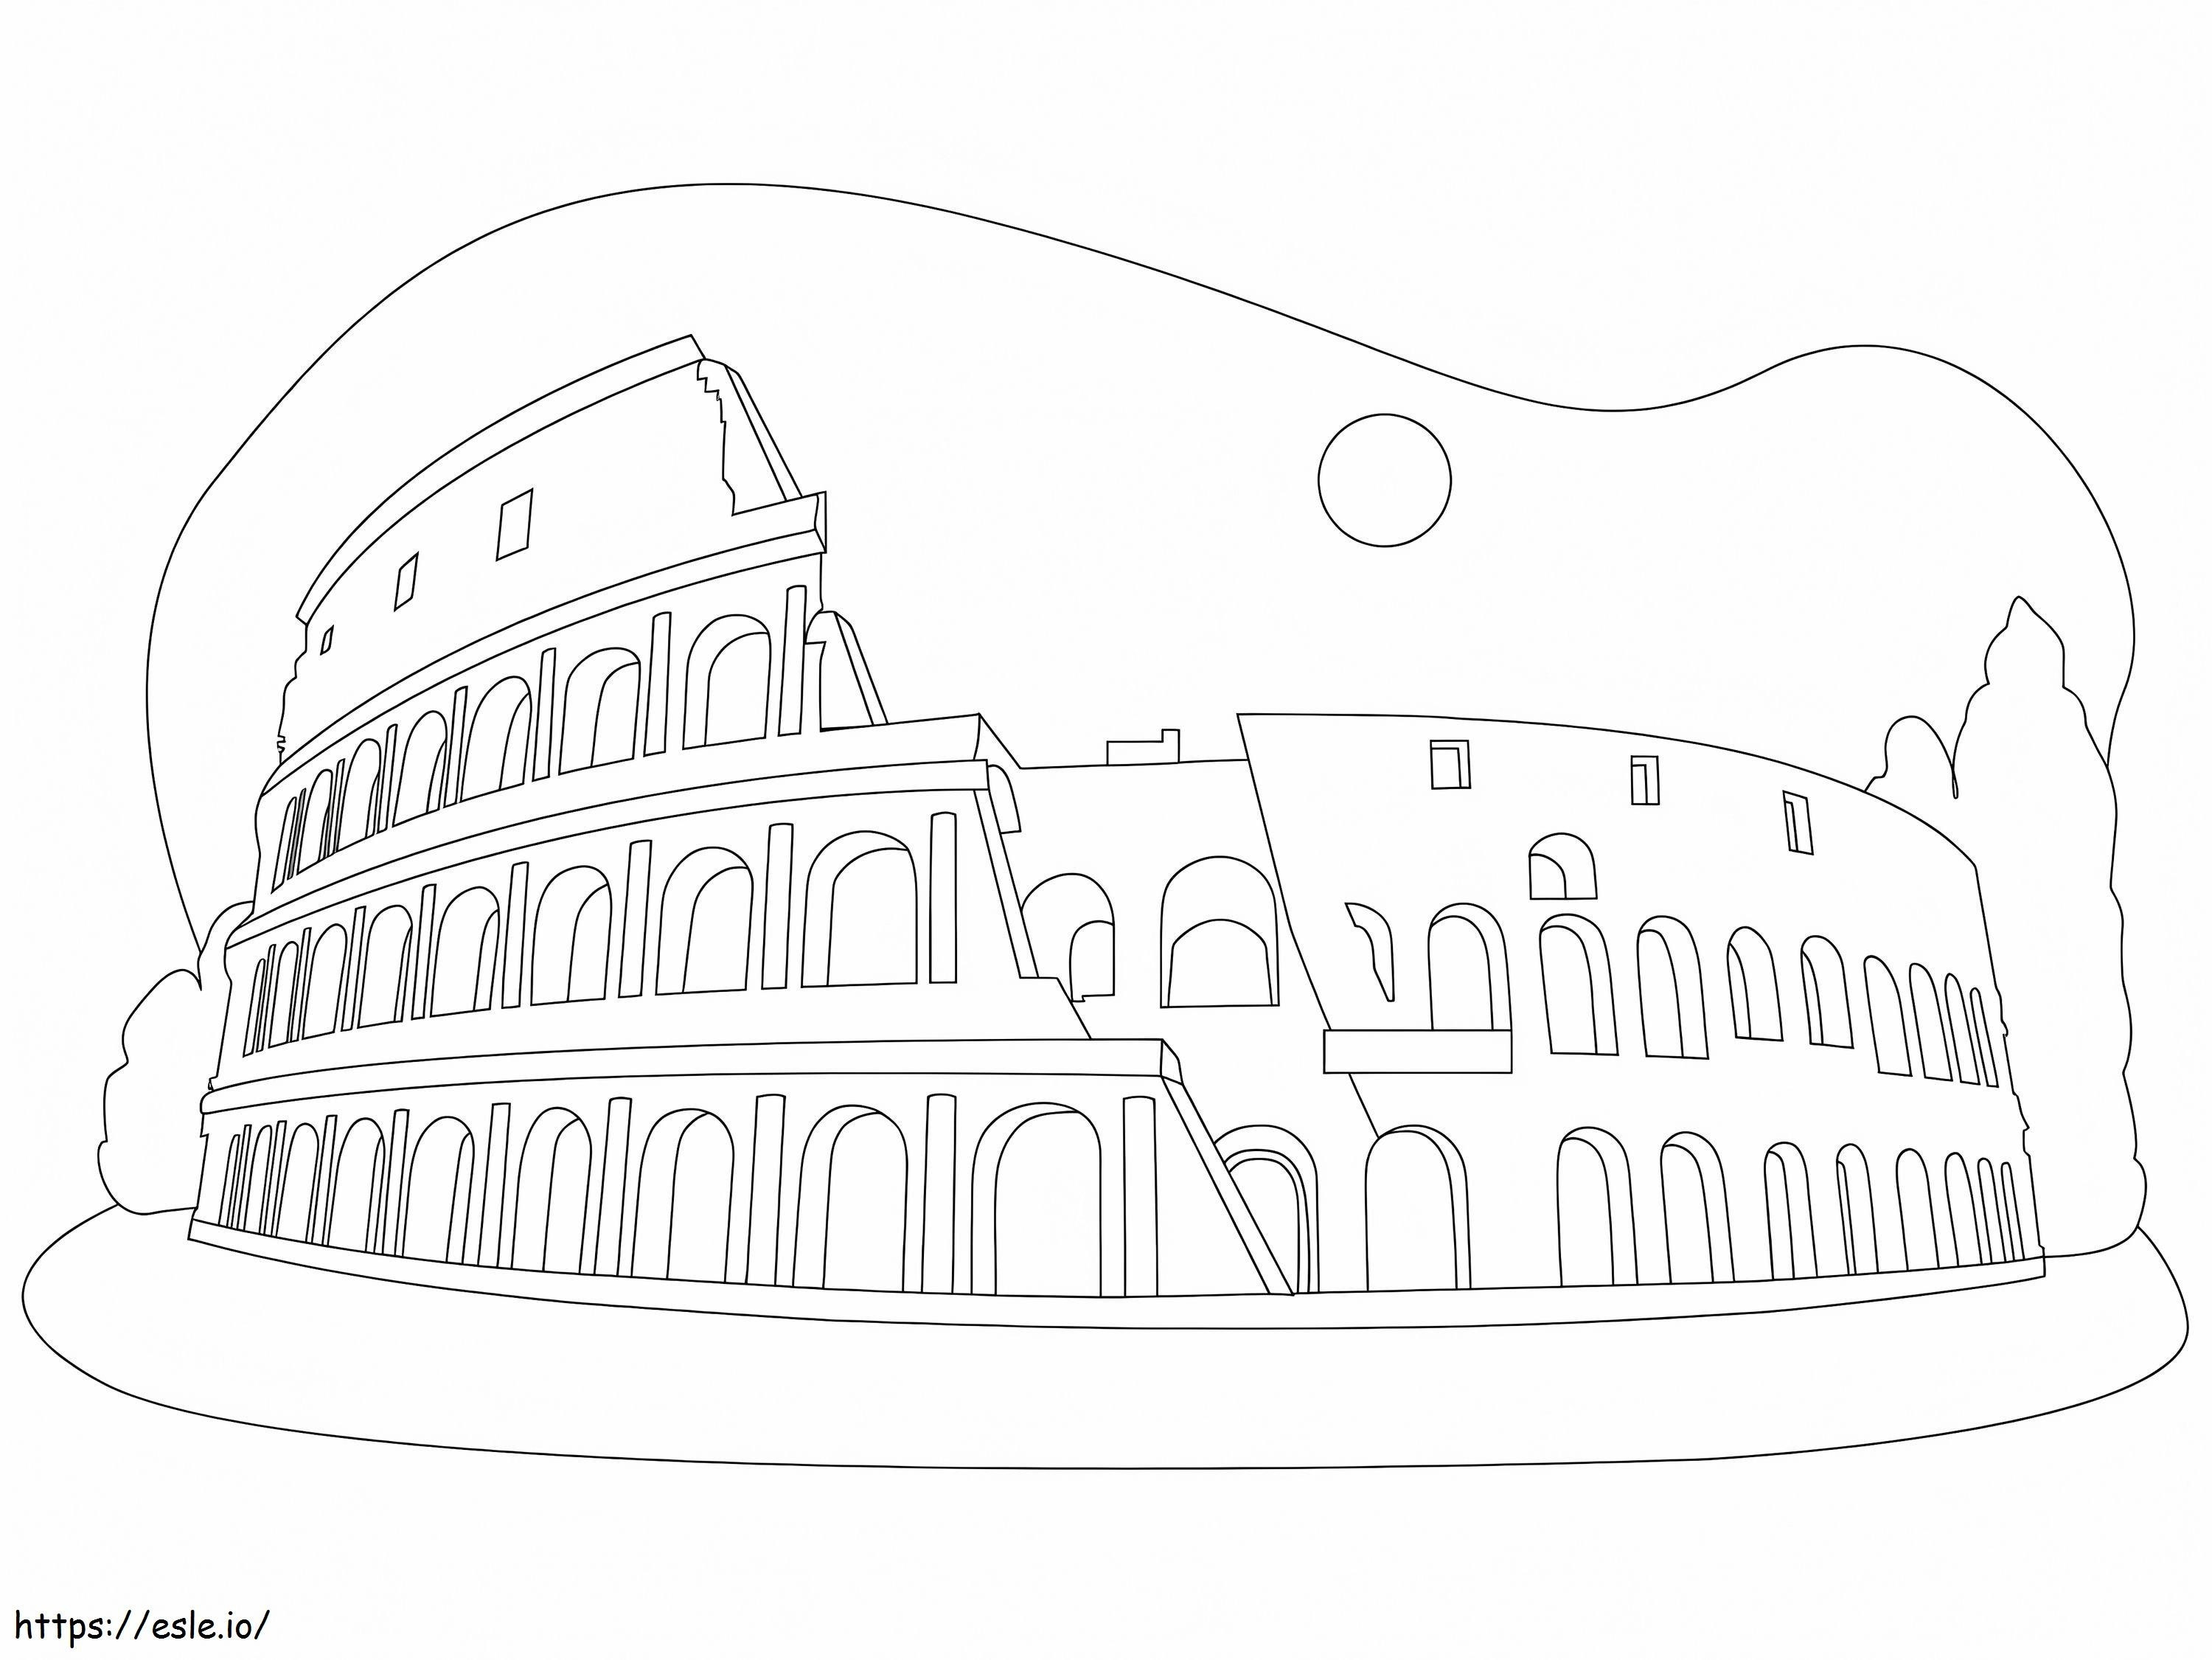 A Colosseum kifestő